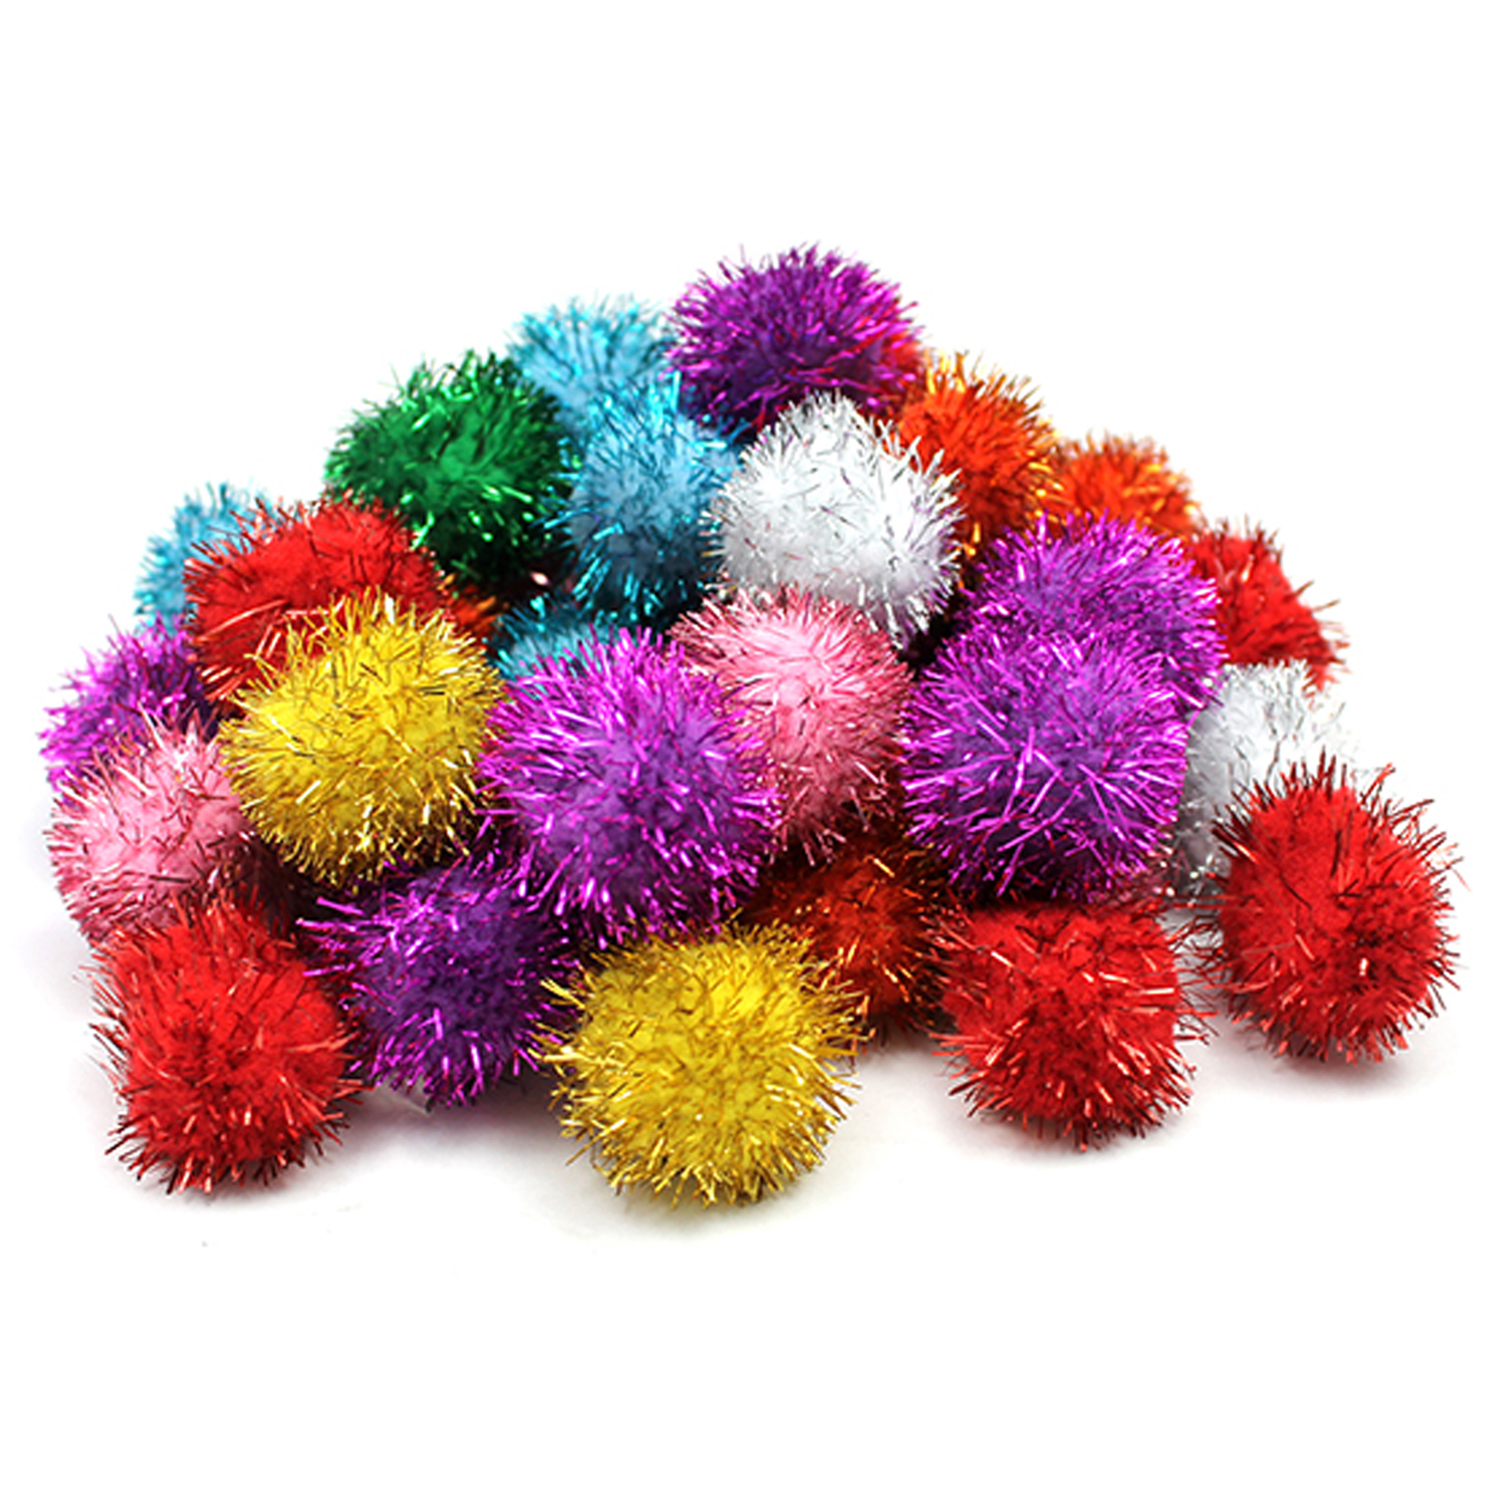 Pacon® Creativity Street® 1” Glitter Pom Poms Assortment, 3 Pack Bundle